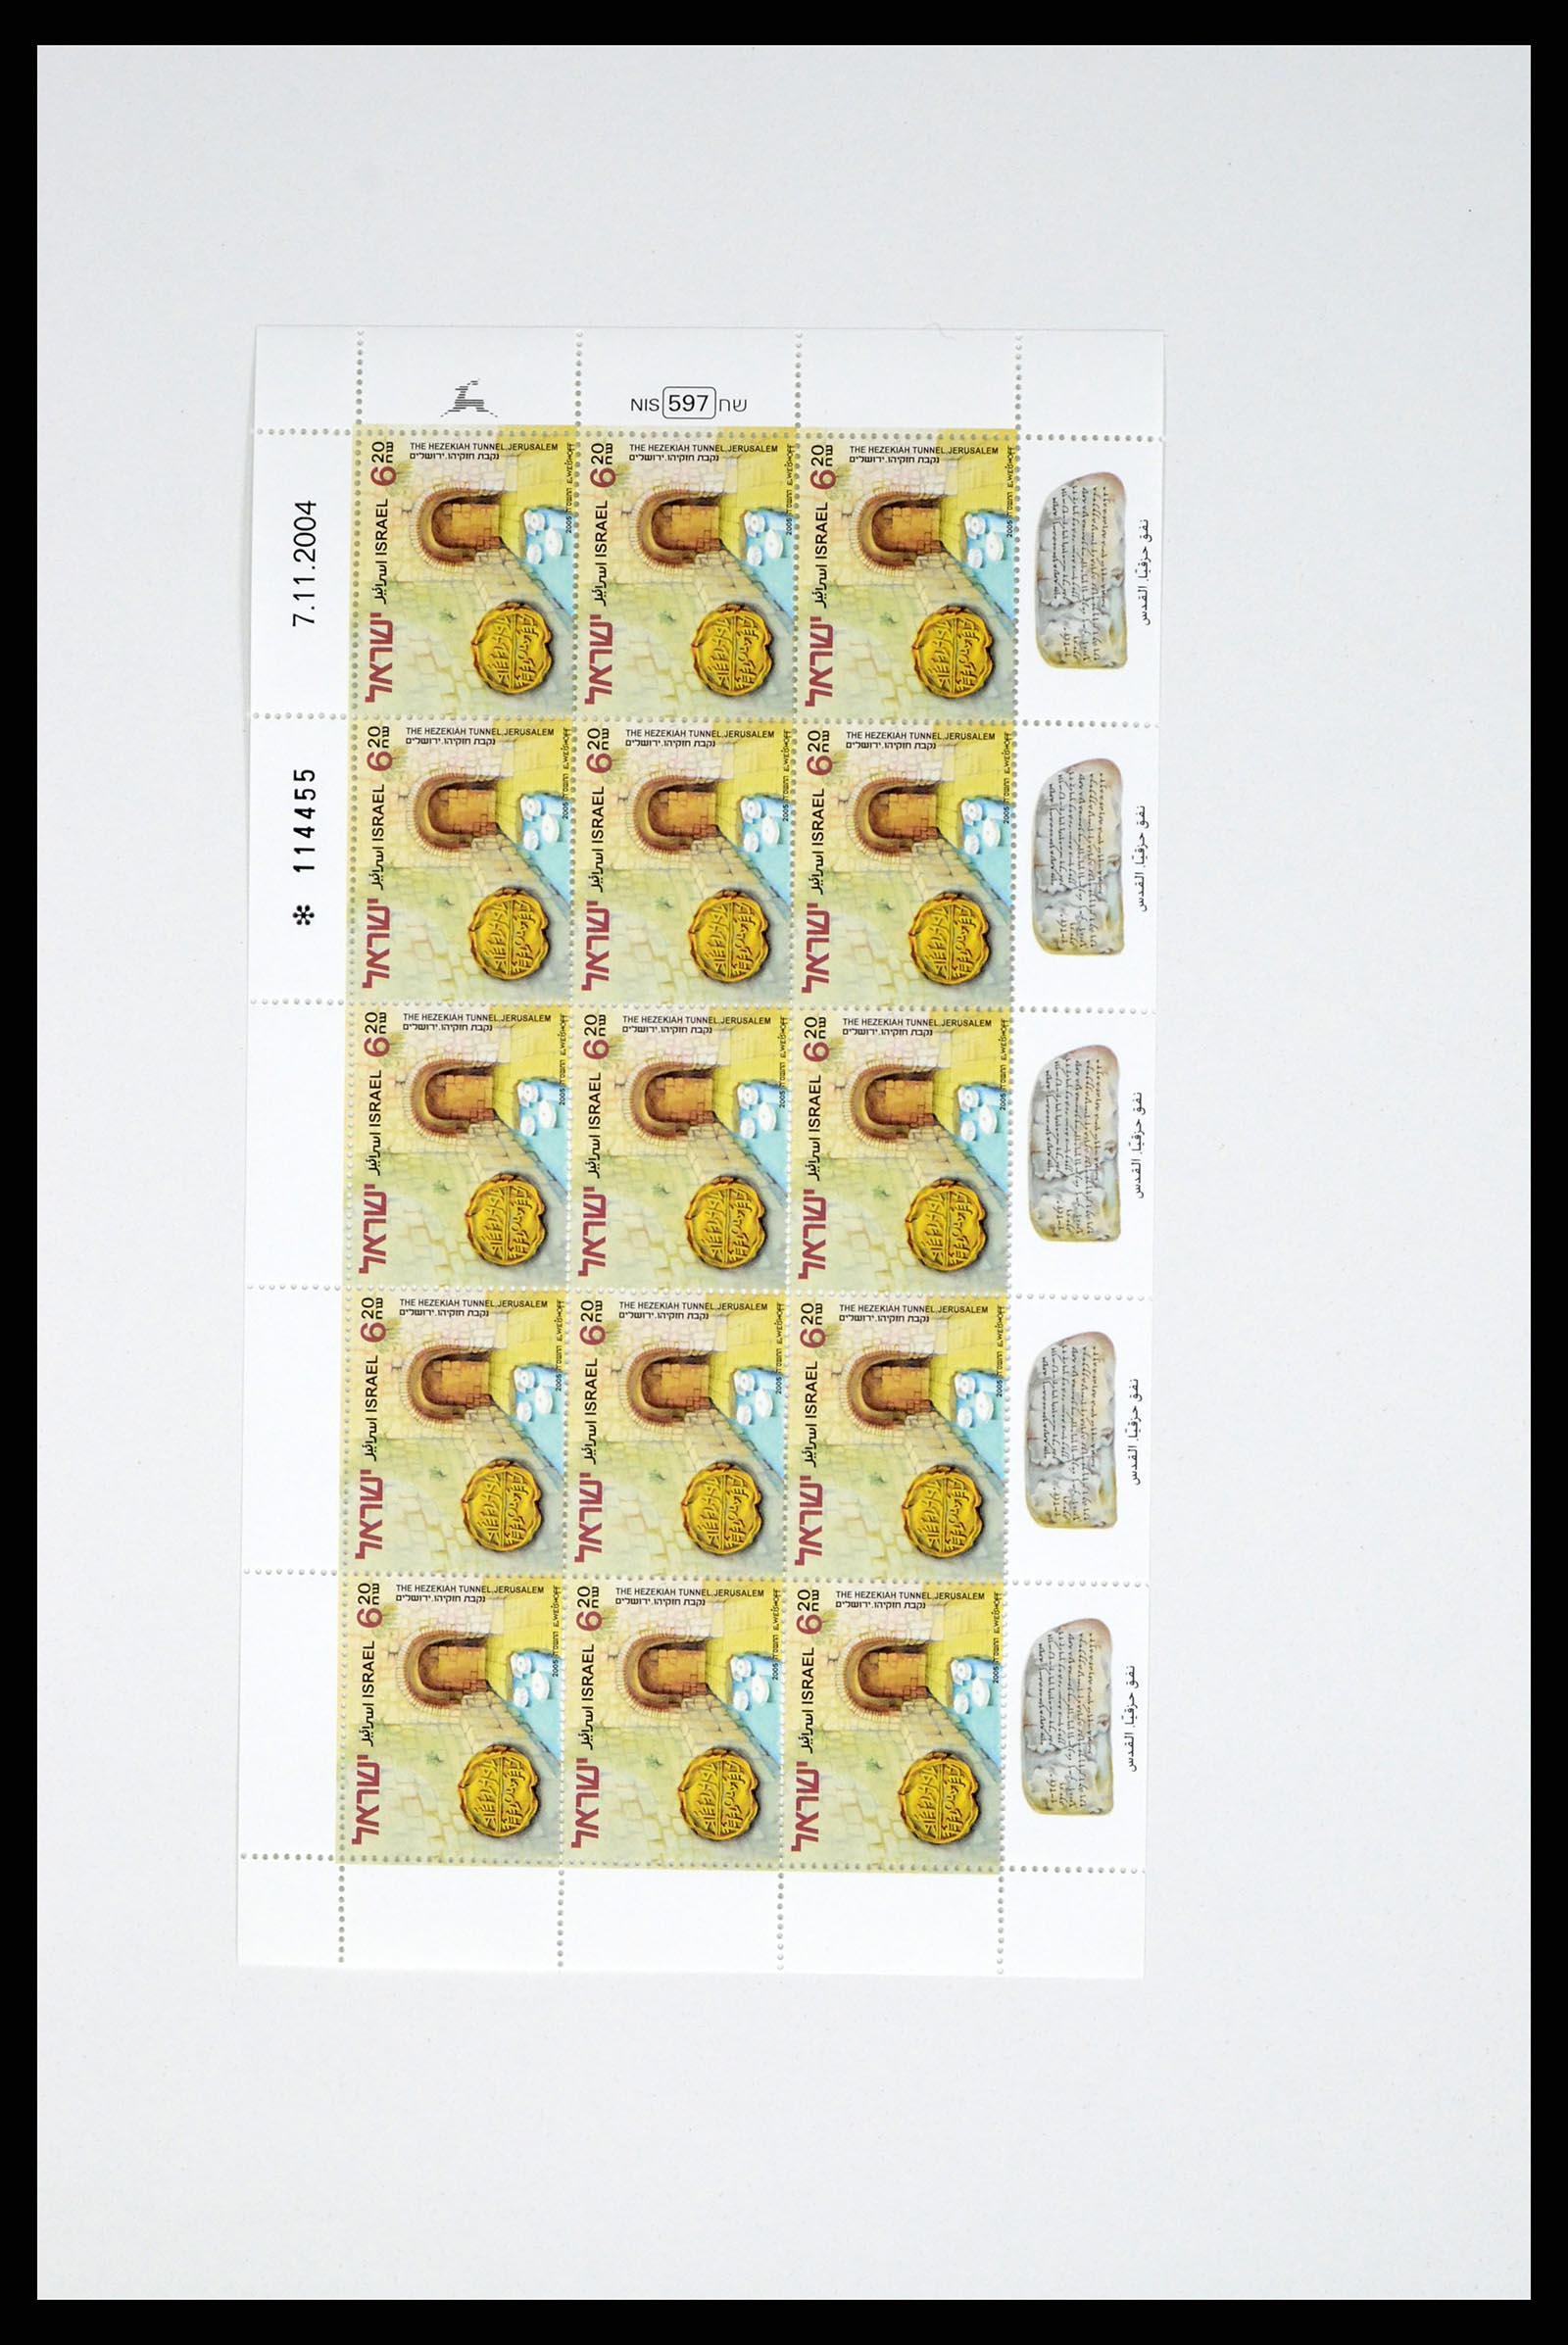 37779 351 - Stamp collection 37779 Israel sheetlets 1986-2009.